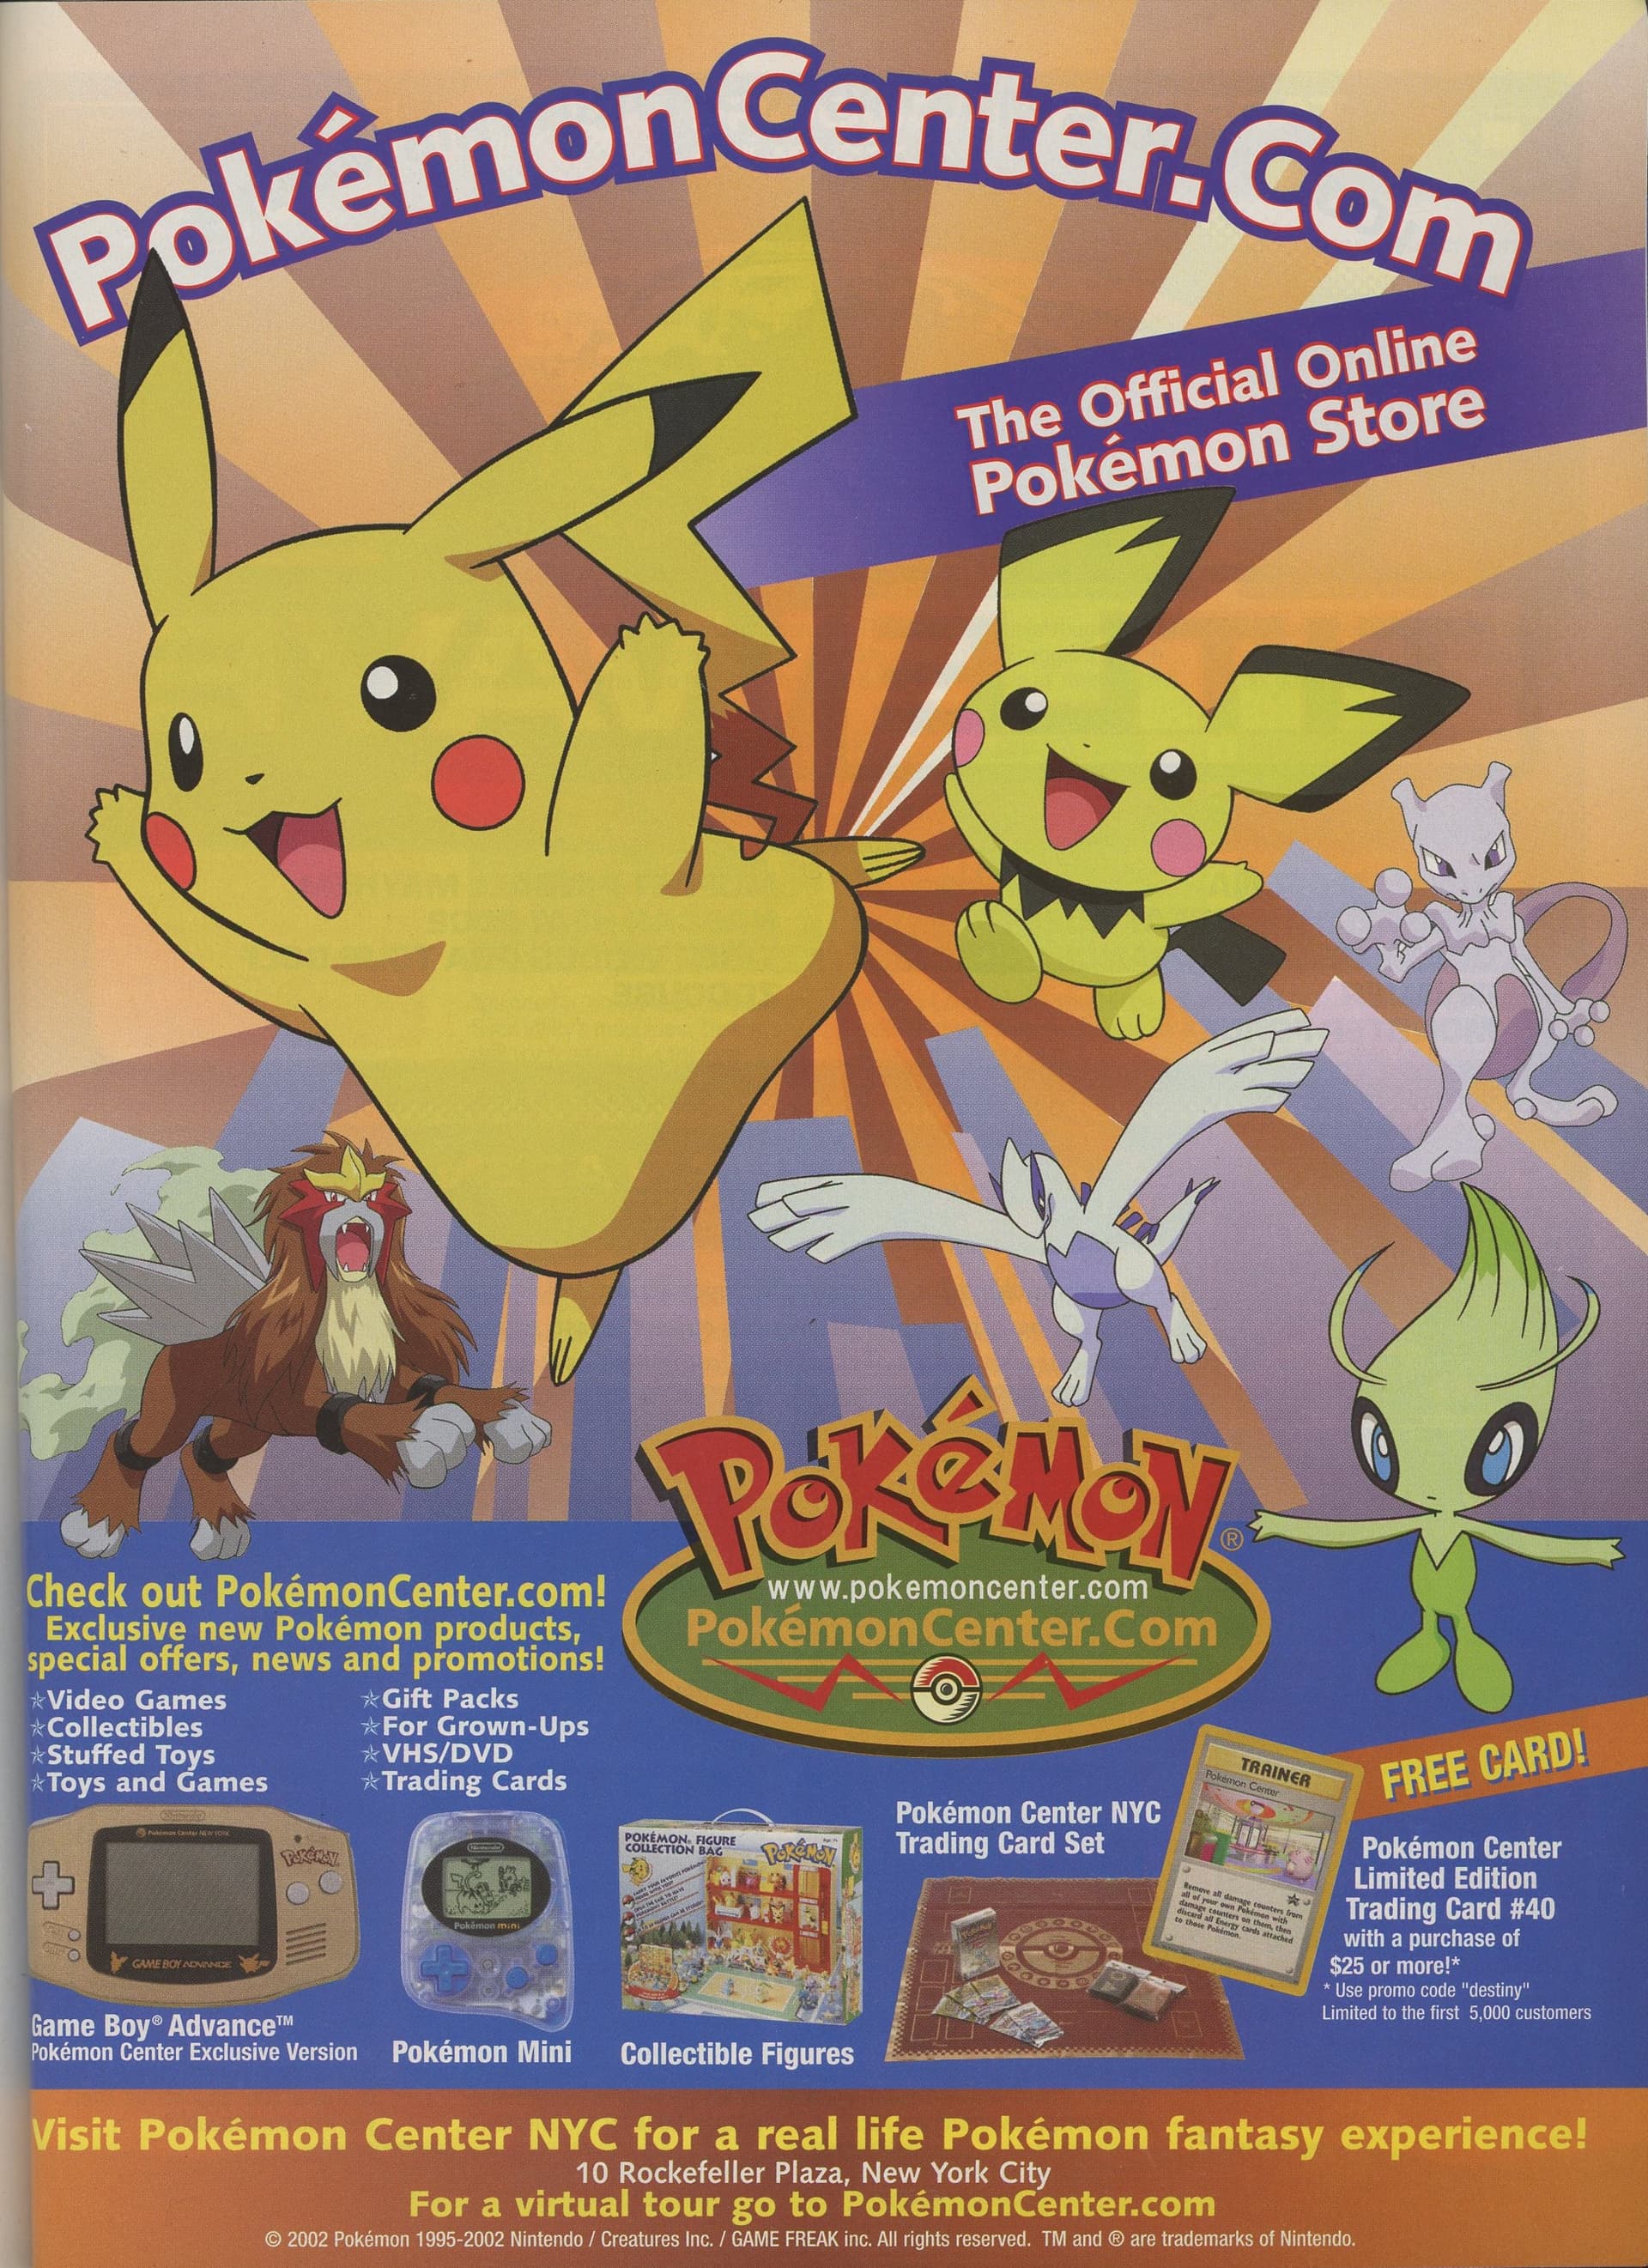 New Pokemon Nostalgia GBA Game Cards Eevee Emerald Stone